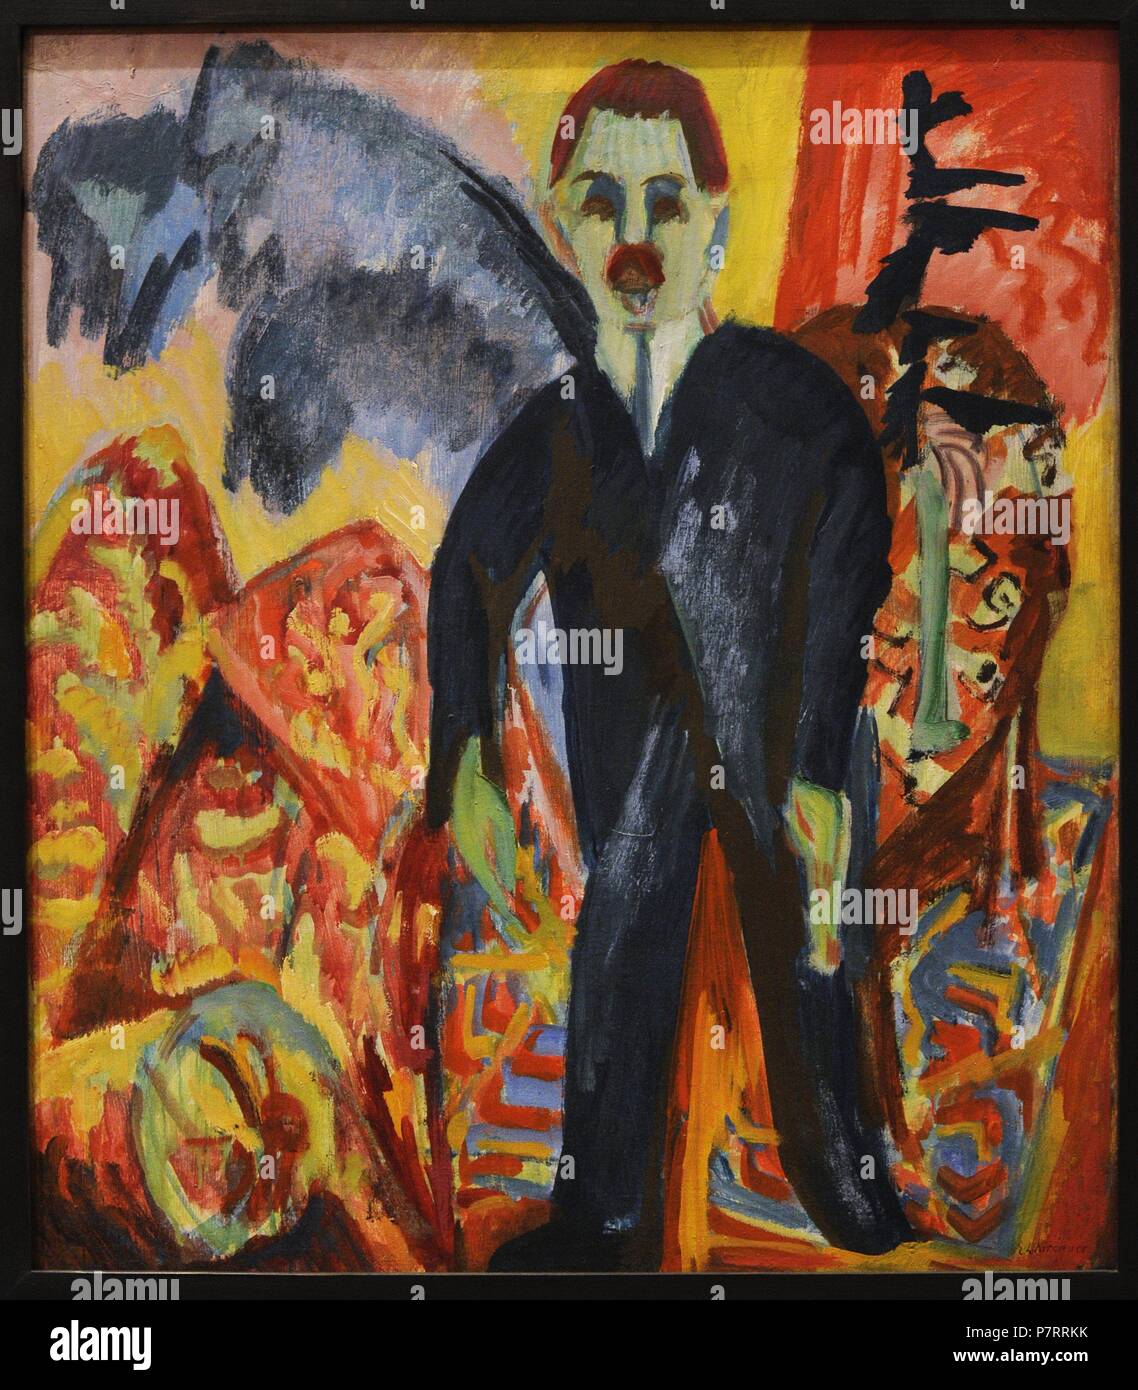 Ernst Ludwig Kirchner (1880-1938). Peintre expressionniste allemand. L'infirmière, 1917-1918. Galerie nationale. Oslo. La Norvège. Banque D'Images